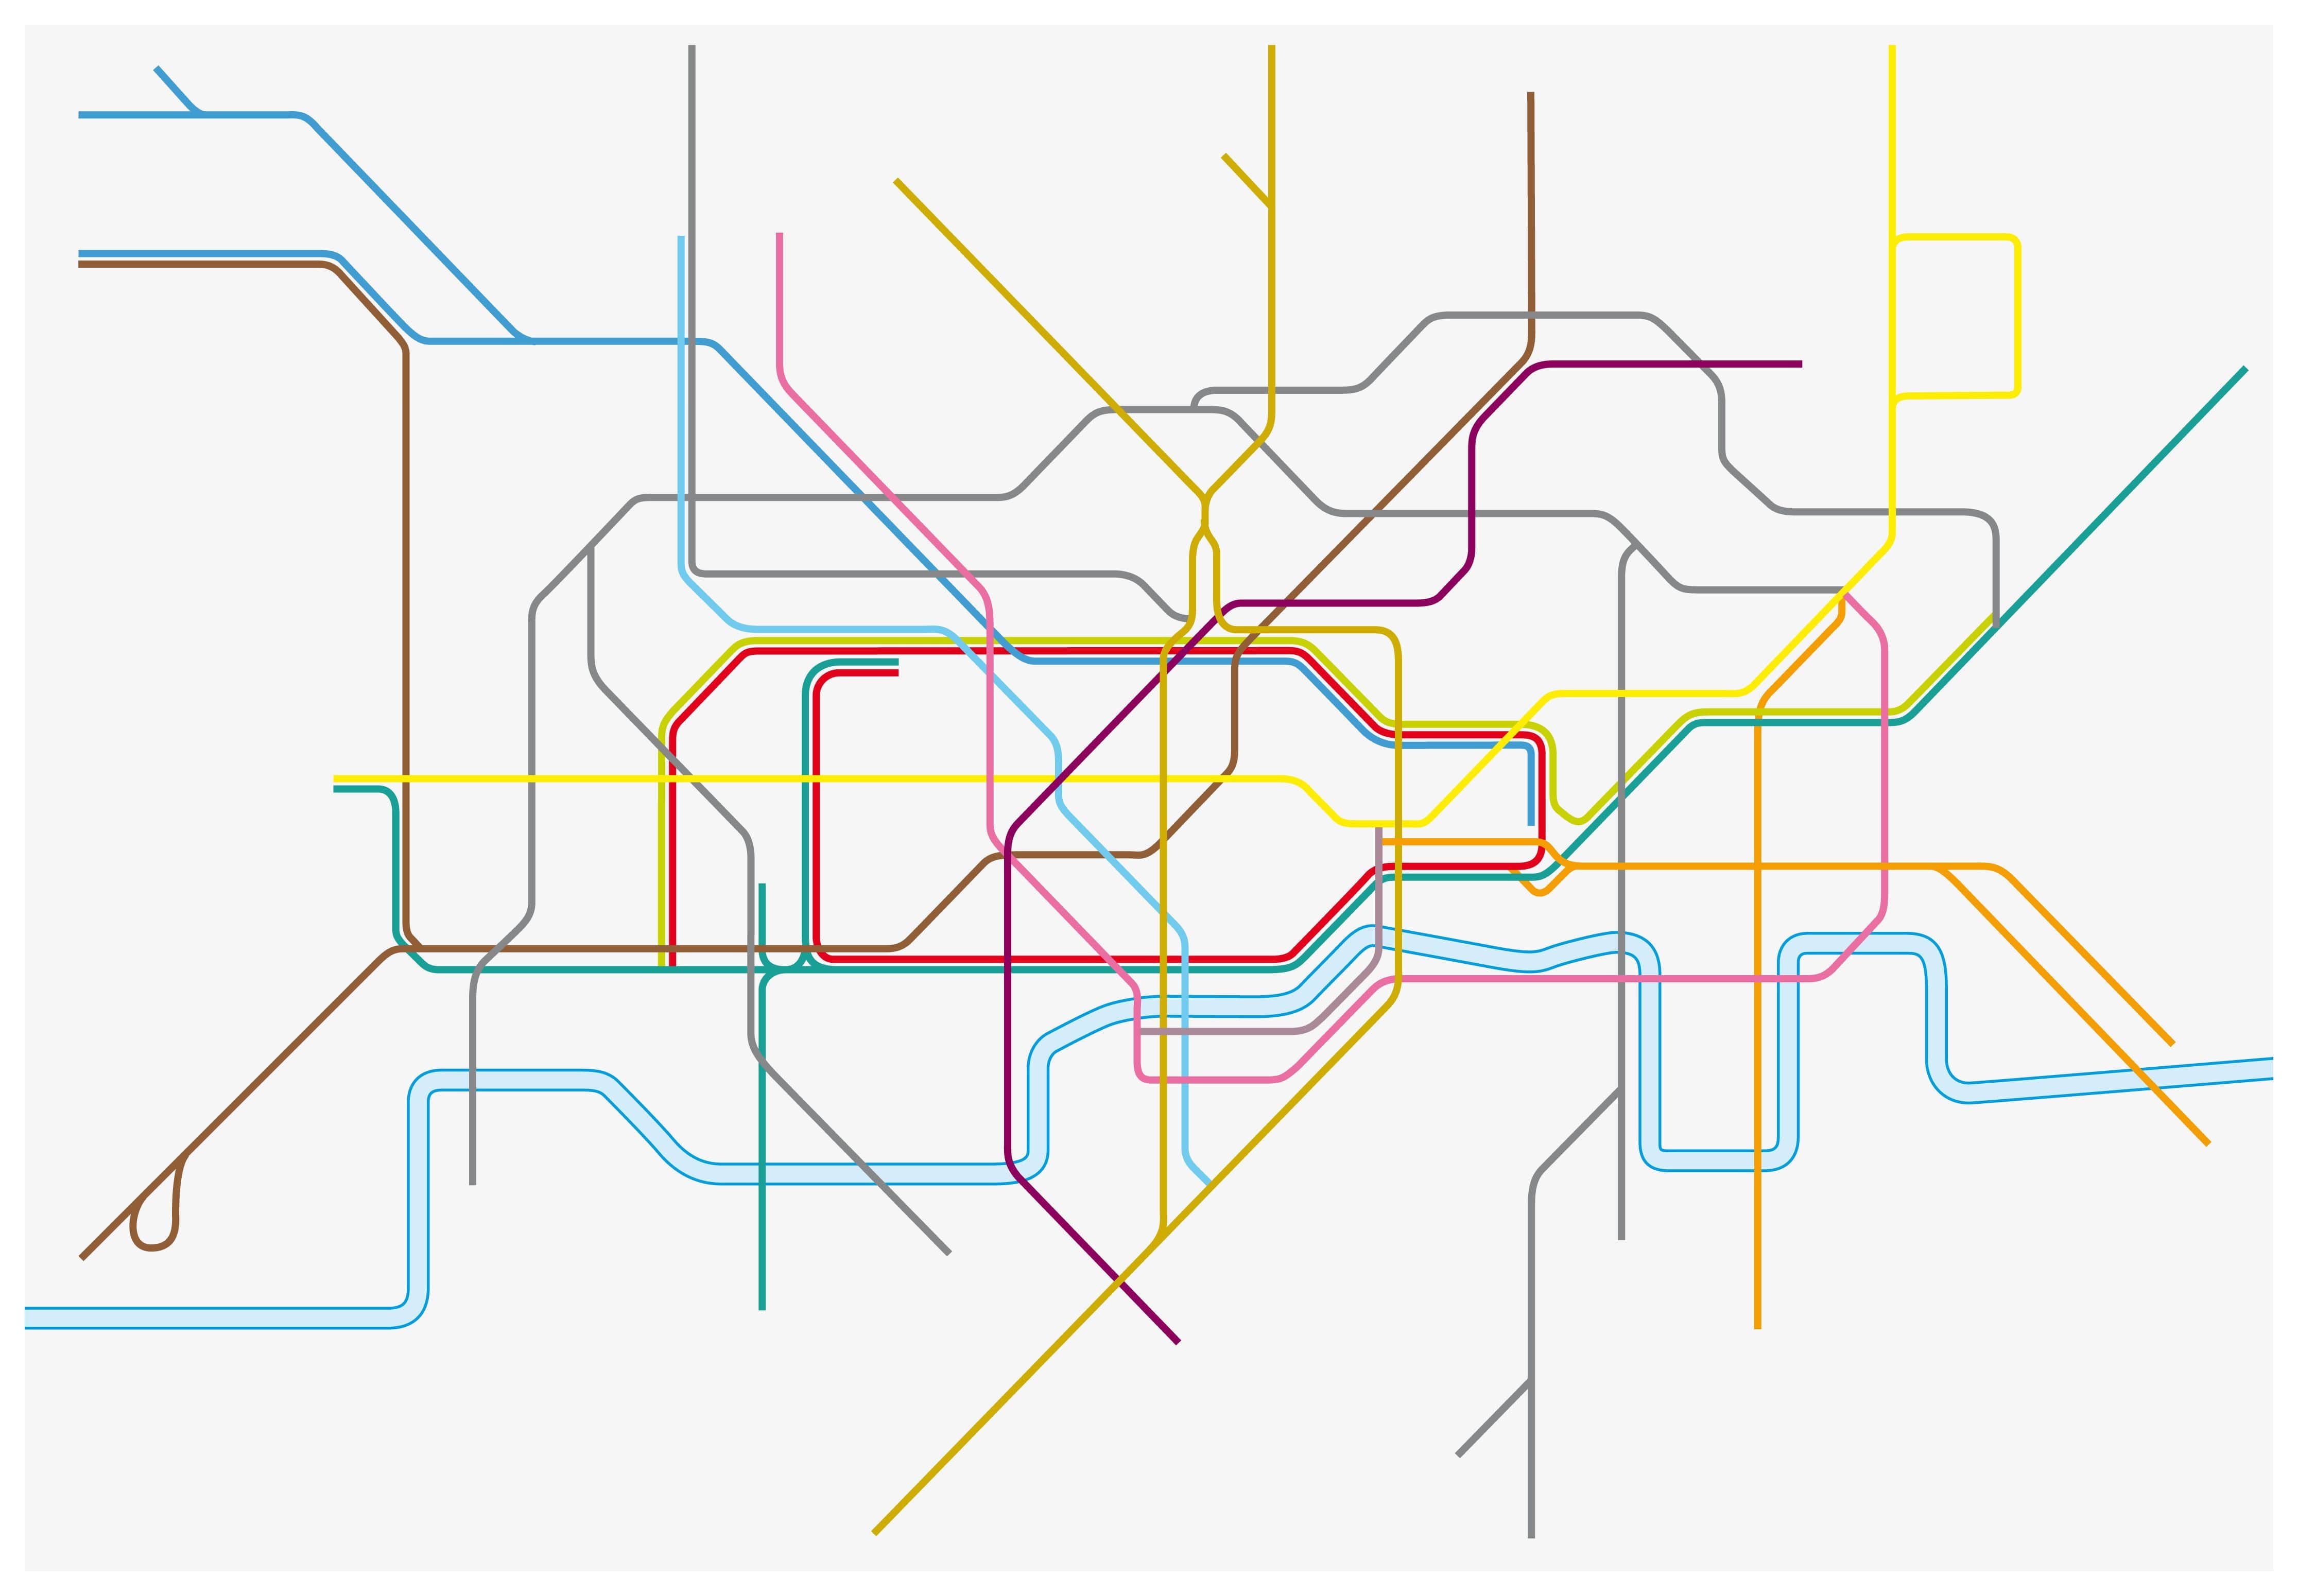 London underground lines